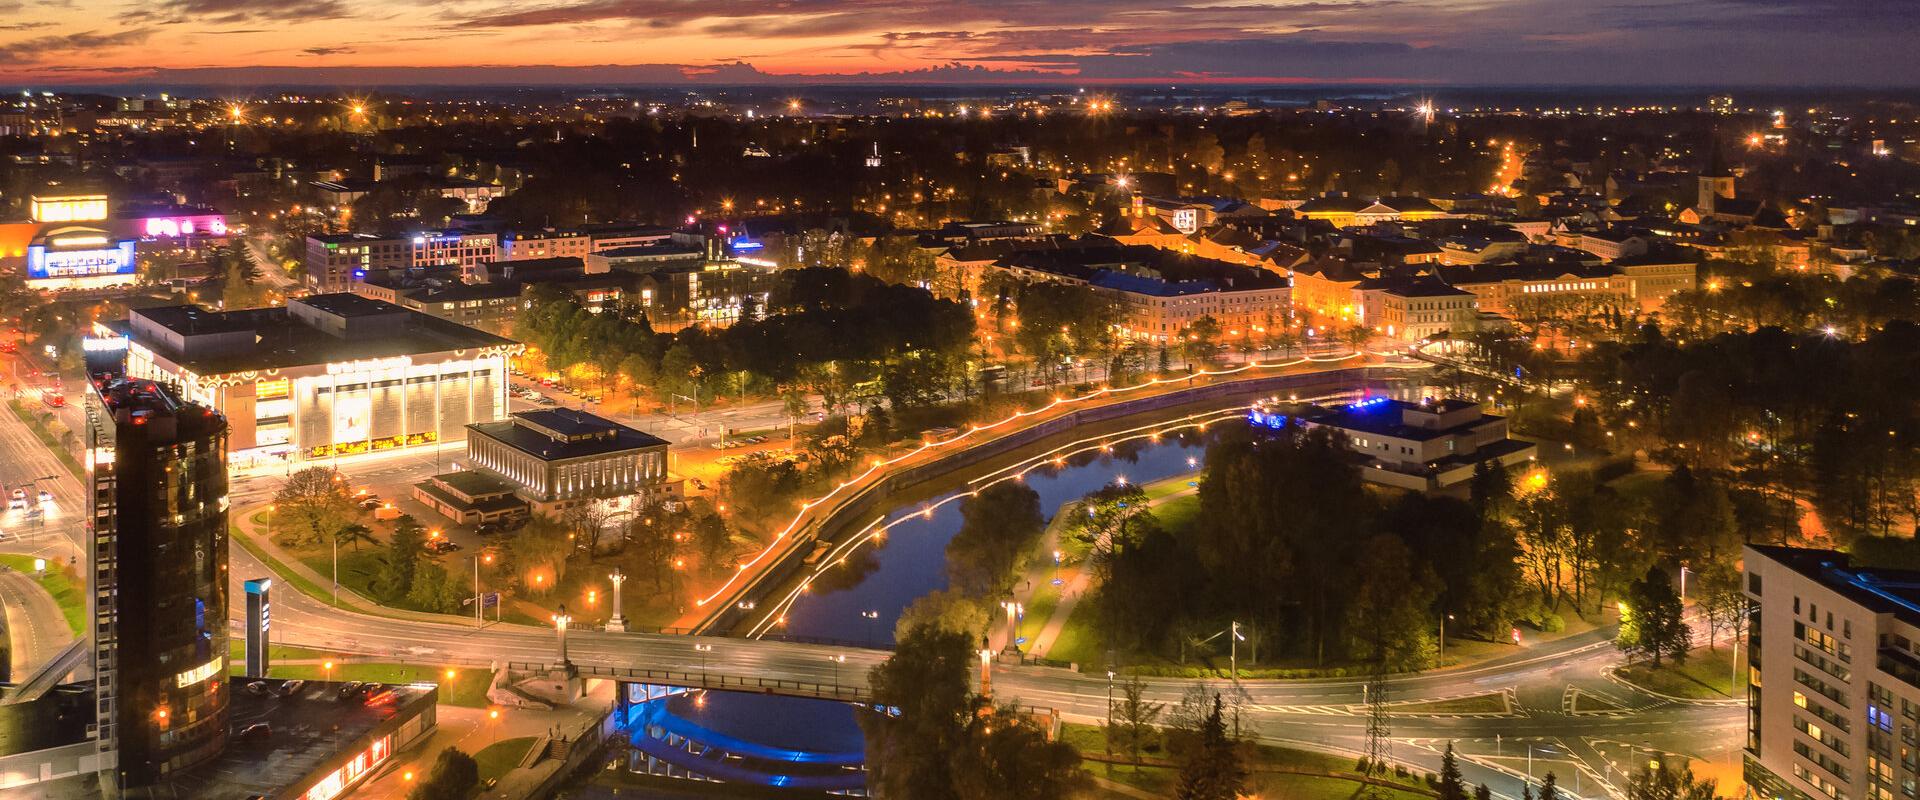 Tartu and Emajõgi River at night in city lights